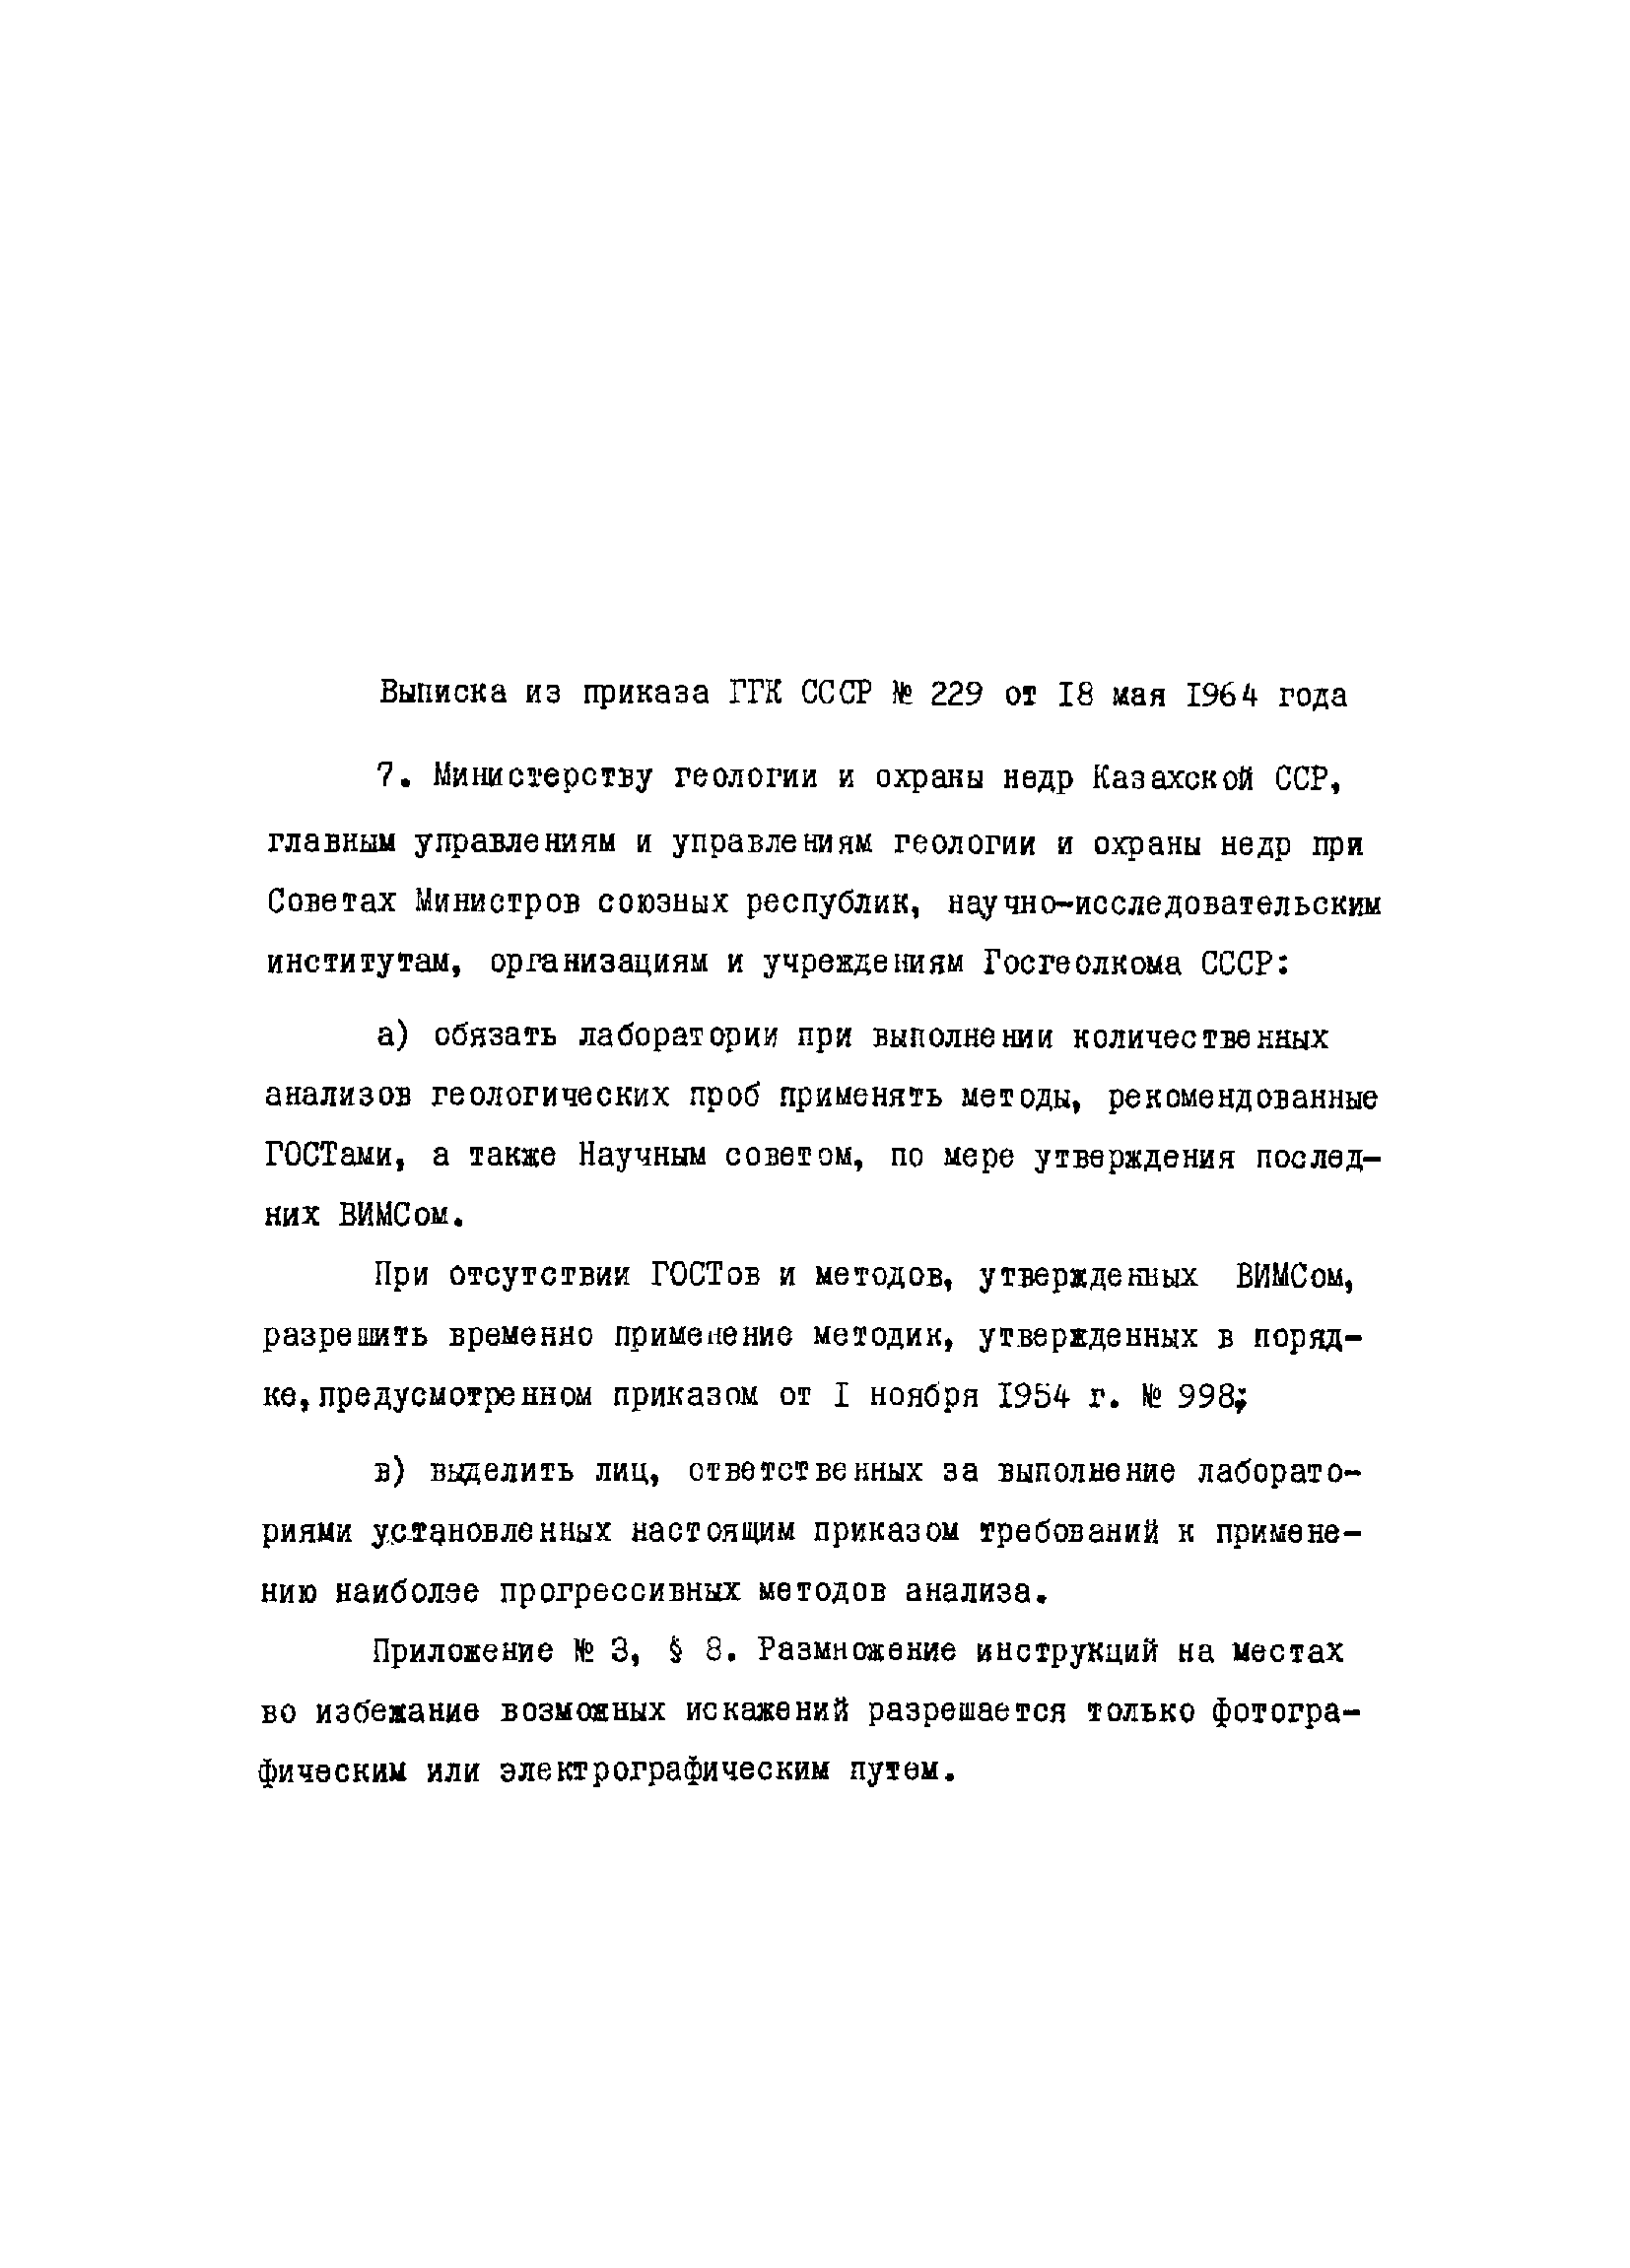 Инструкция НСАМ 89-Х